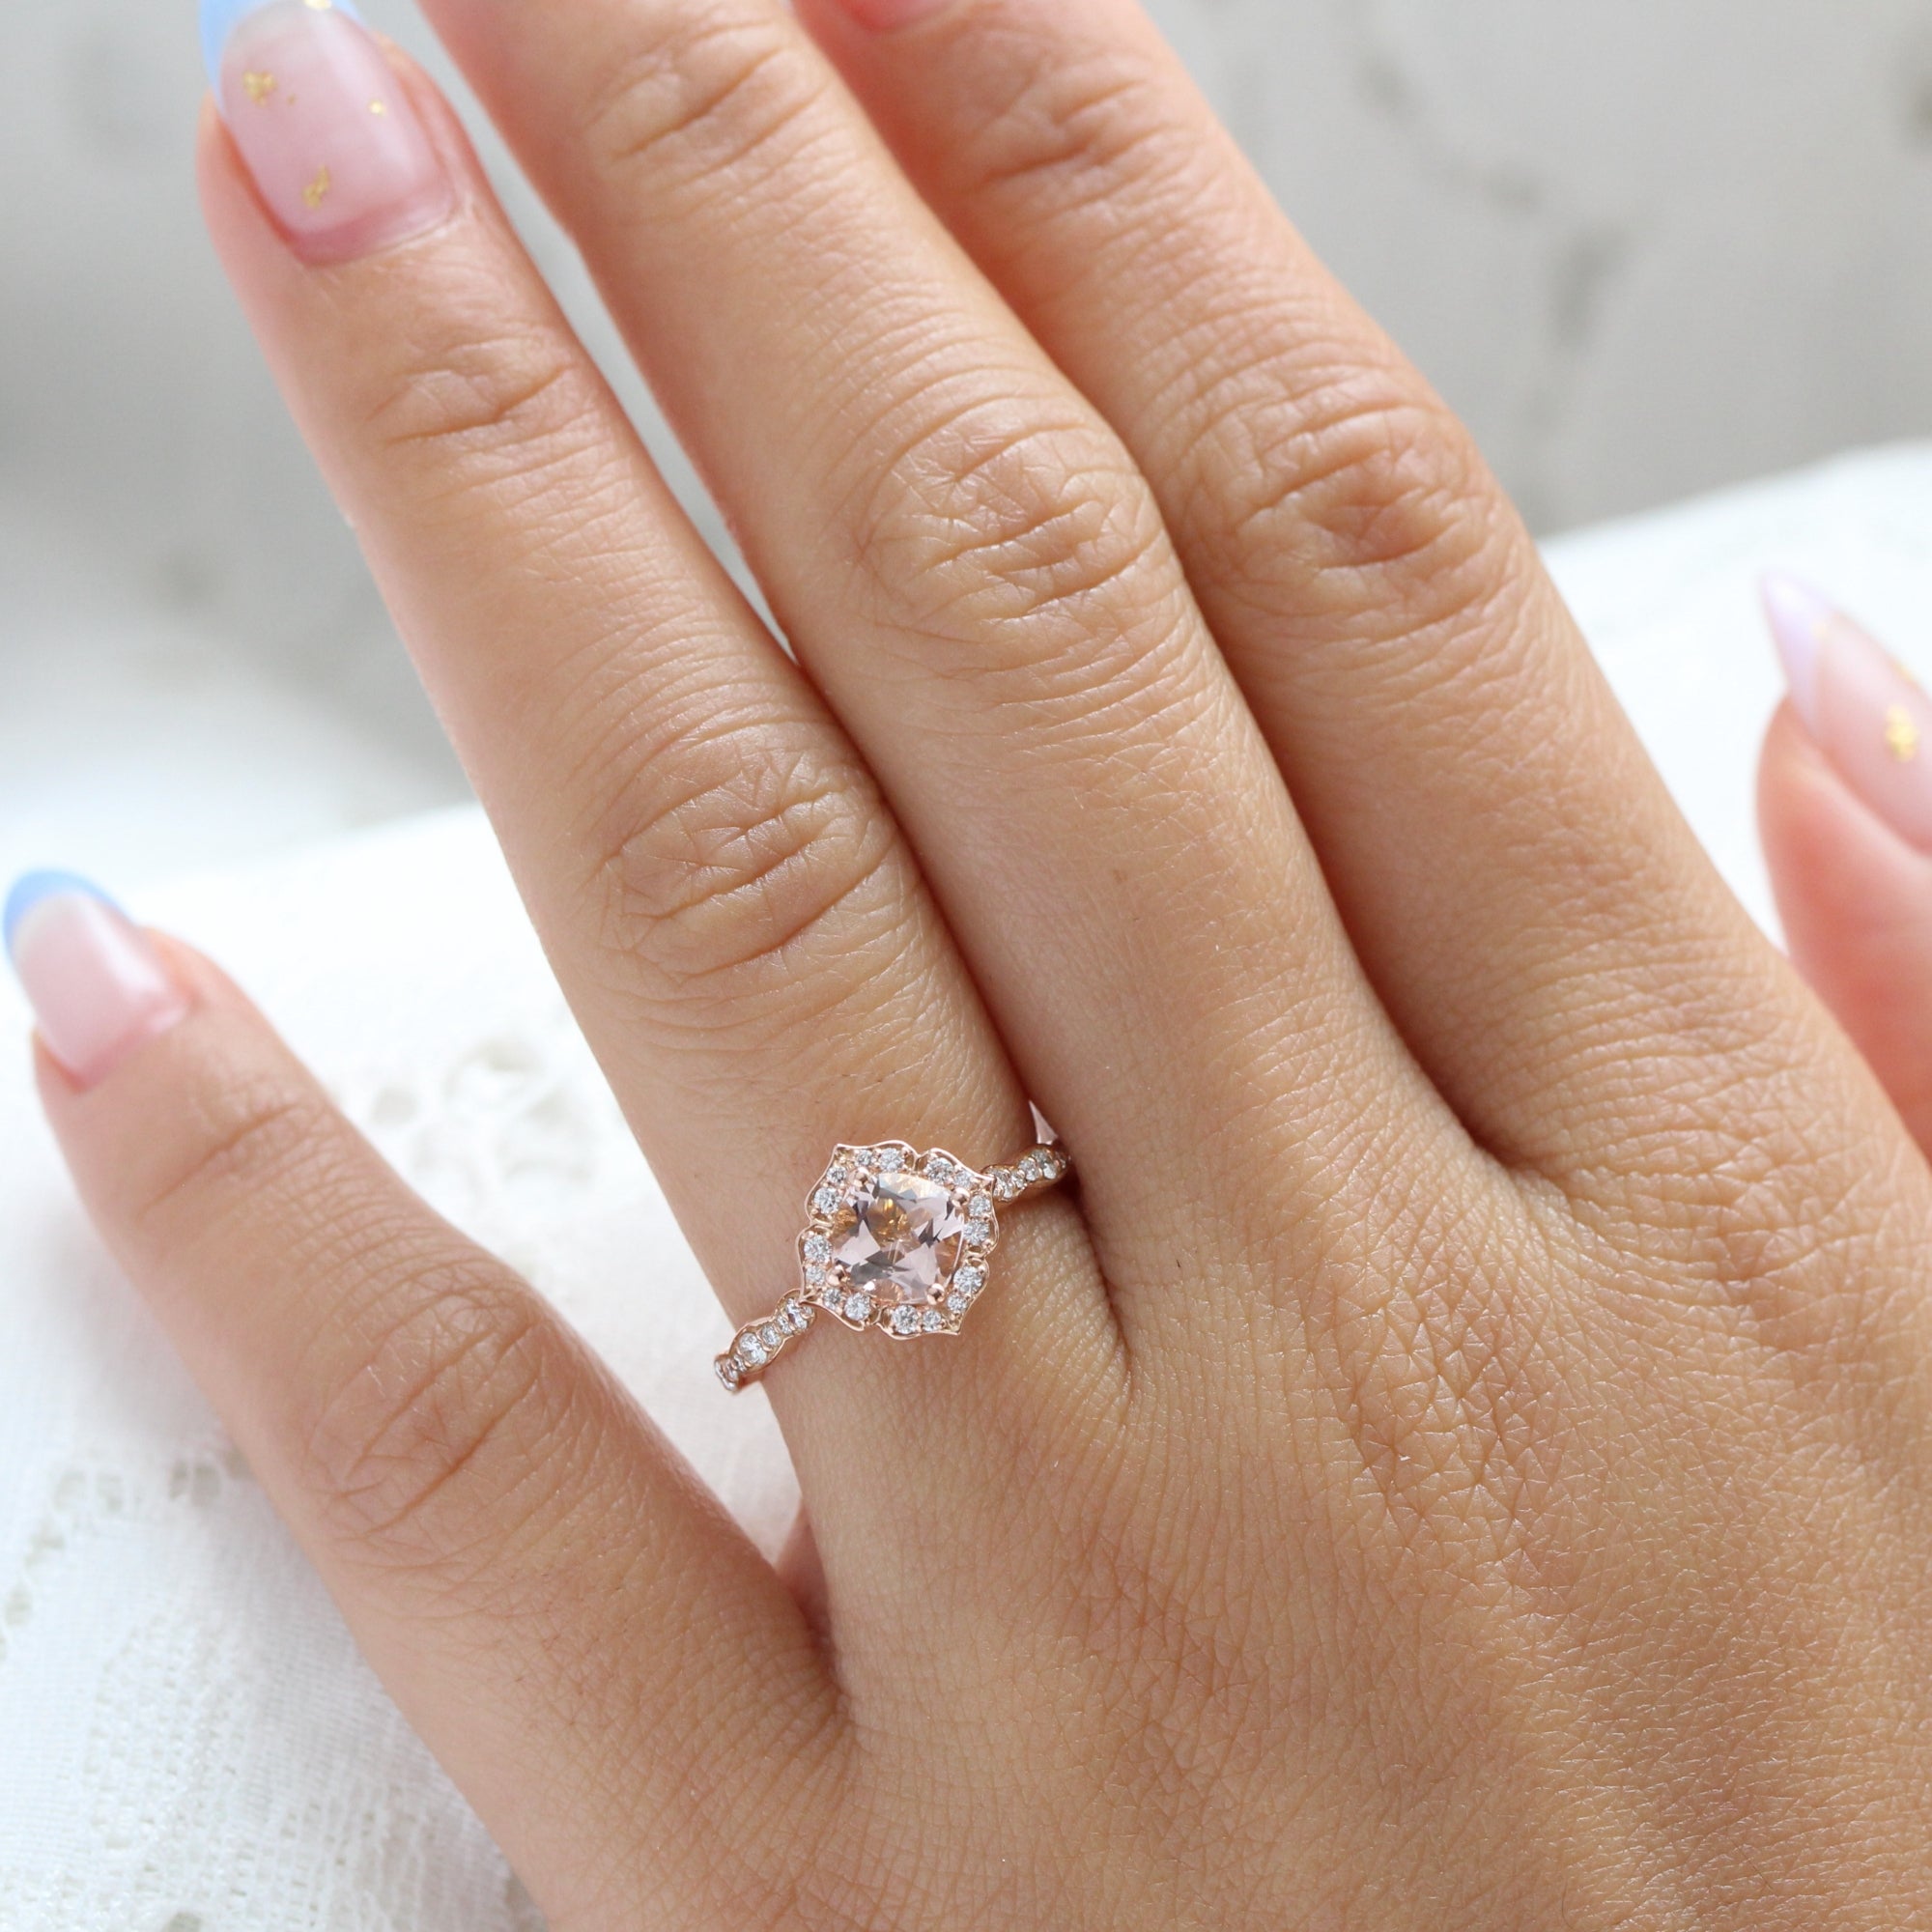 Women's Vintage Pear Pink Morganite Engagement Ring